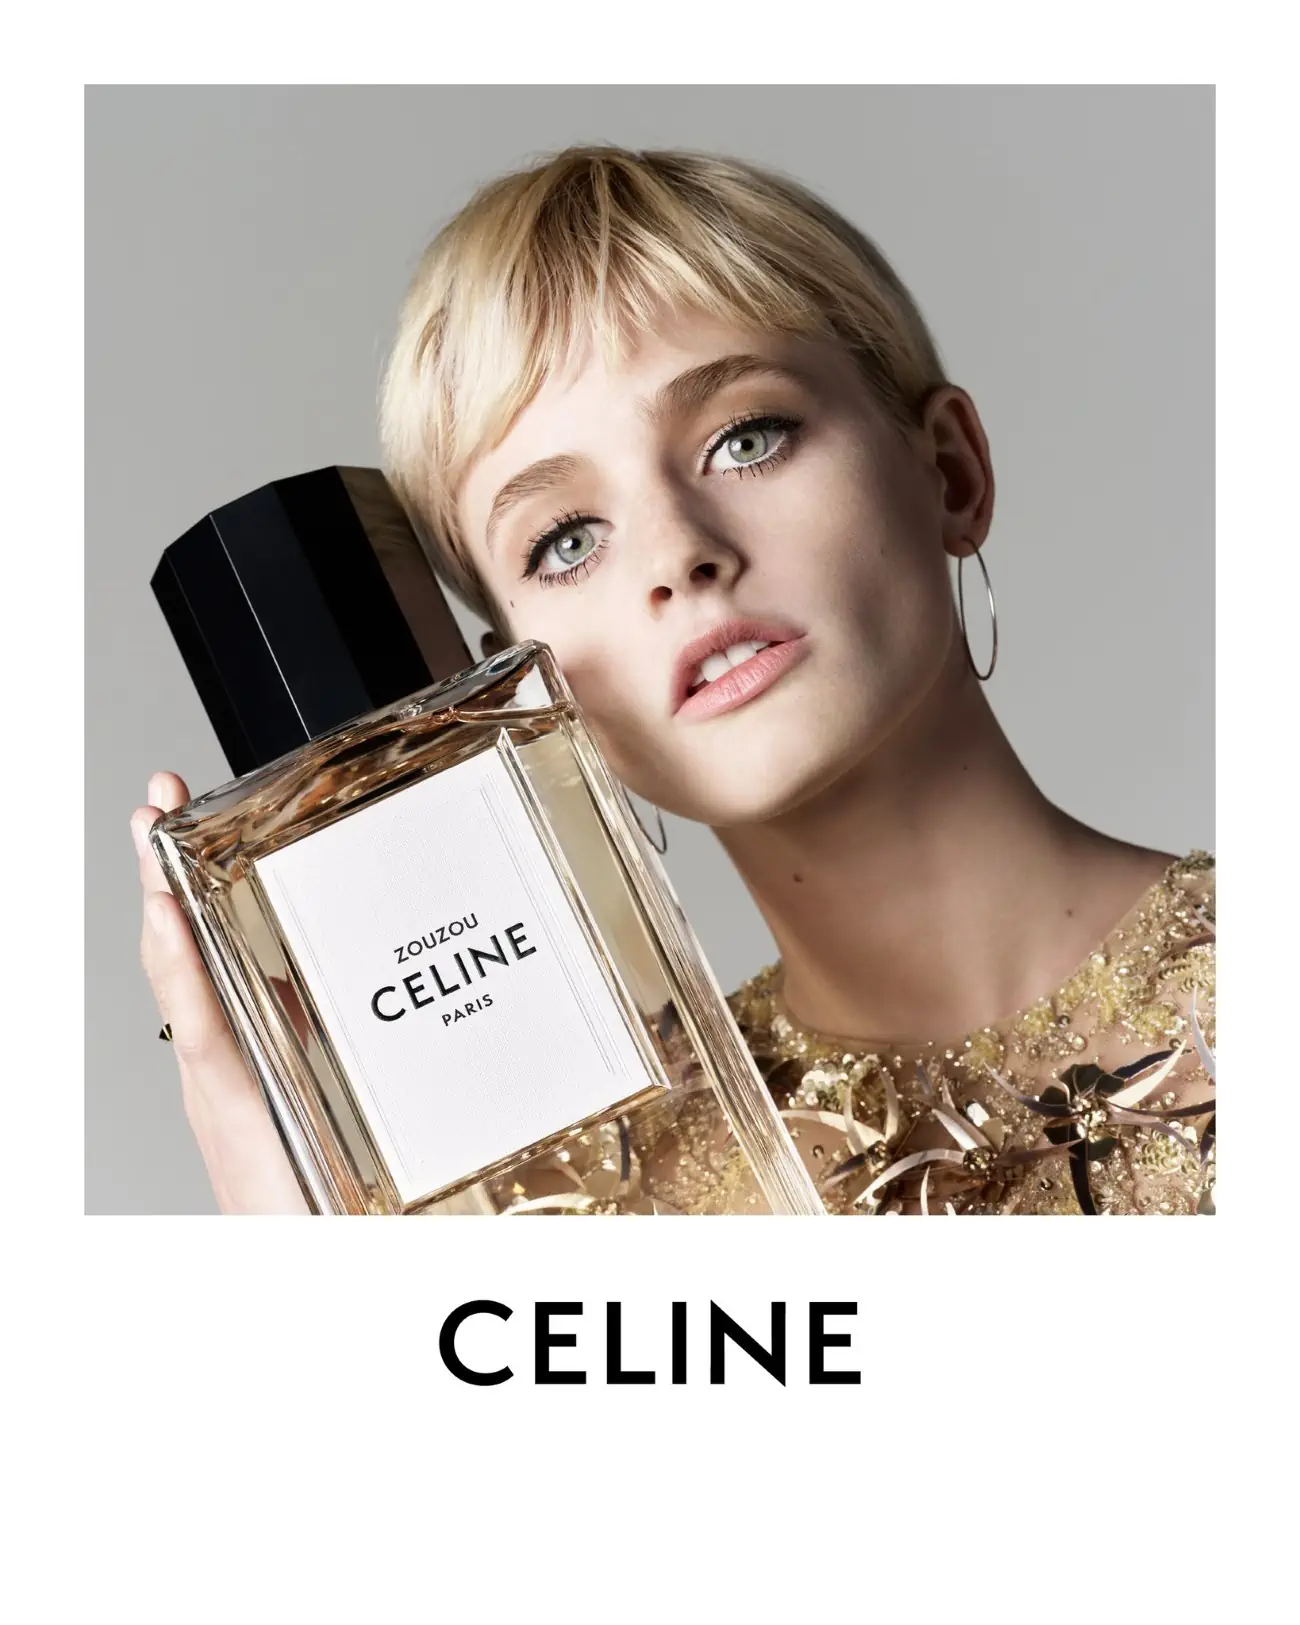 Esther-Rose McGregor enchants as the face of Celine's new fragrance Zouzou